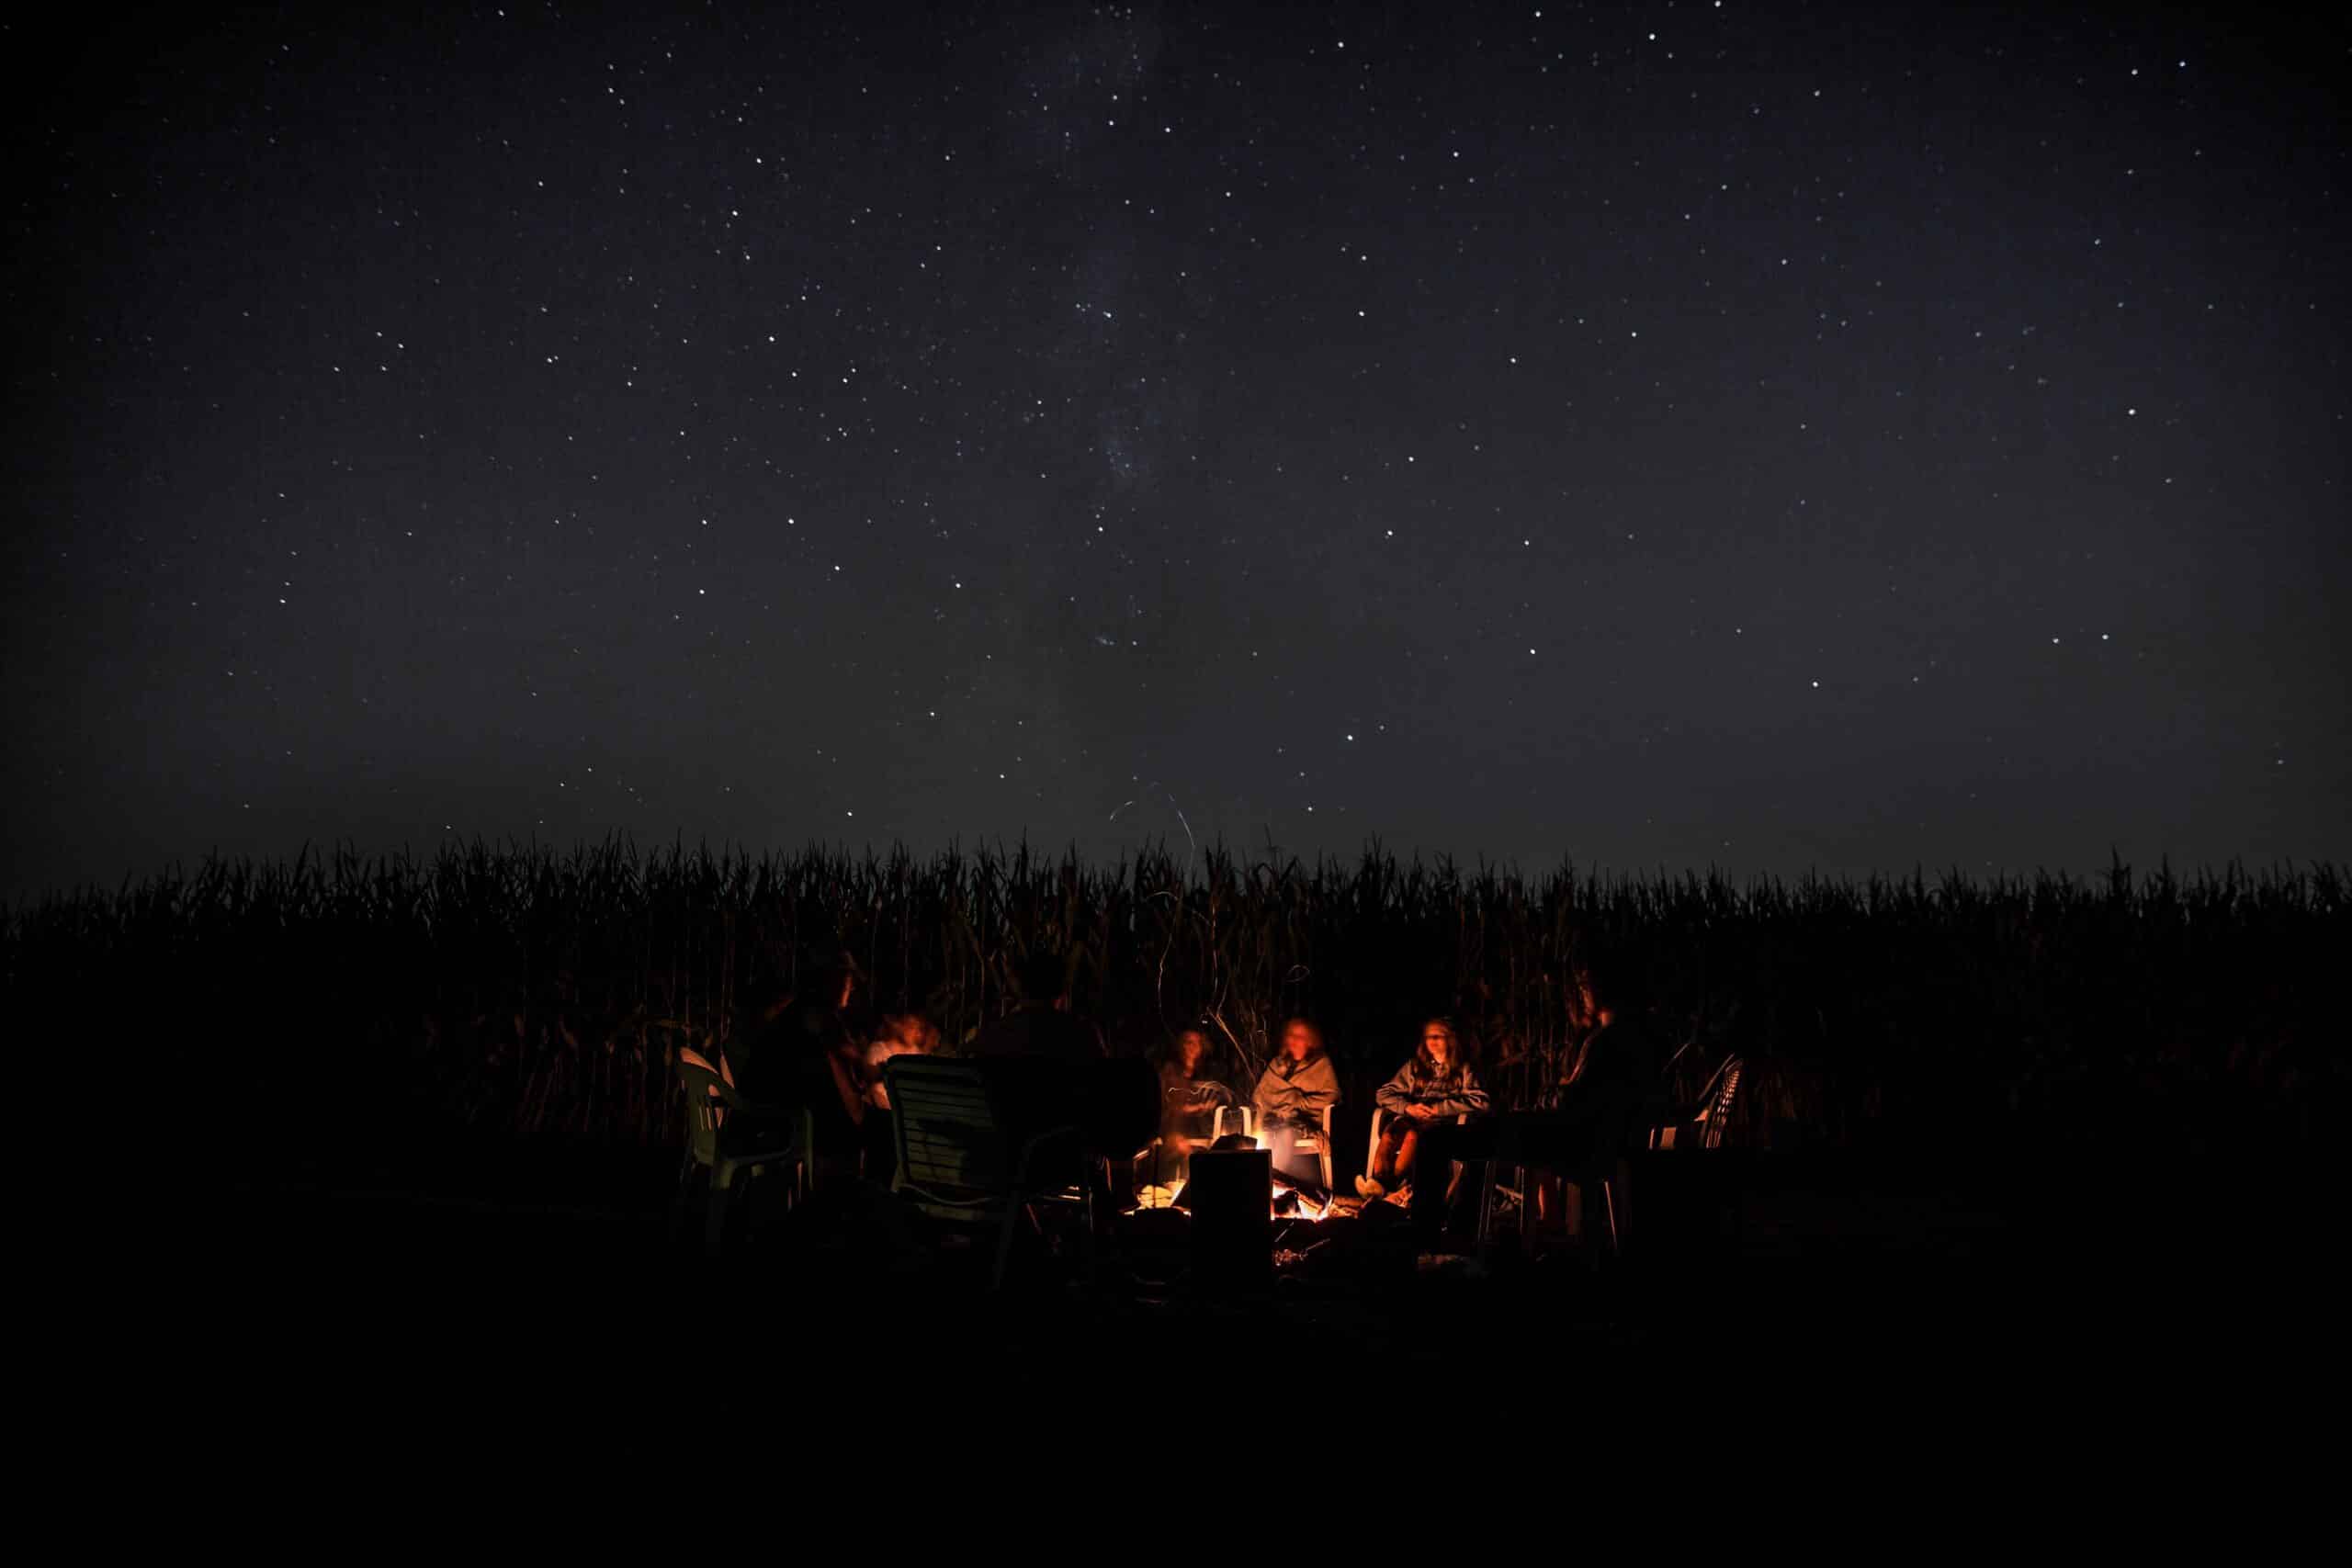 Gathering around the imaginary campfire